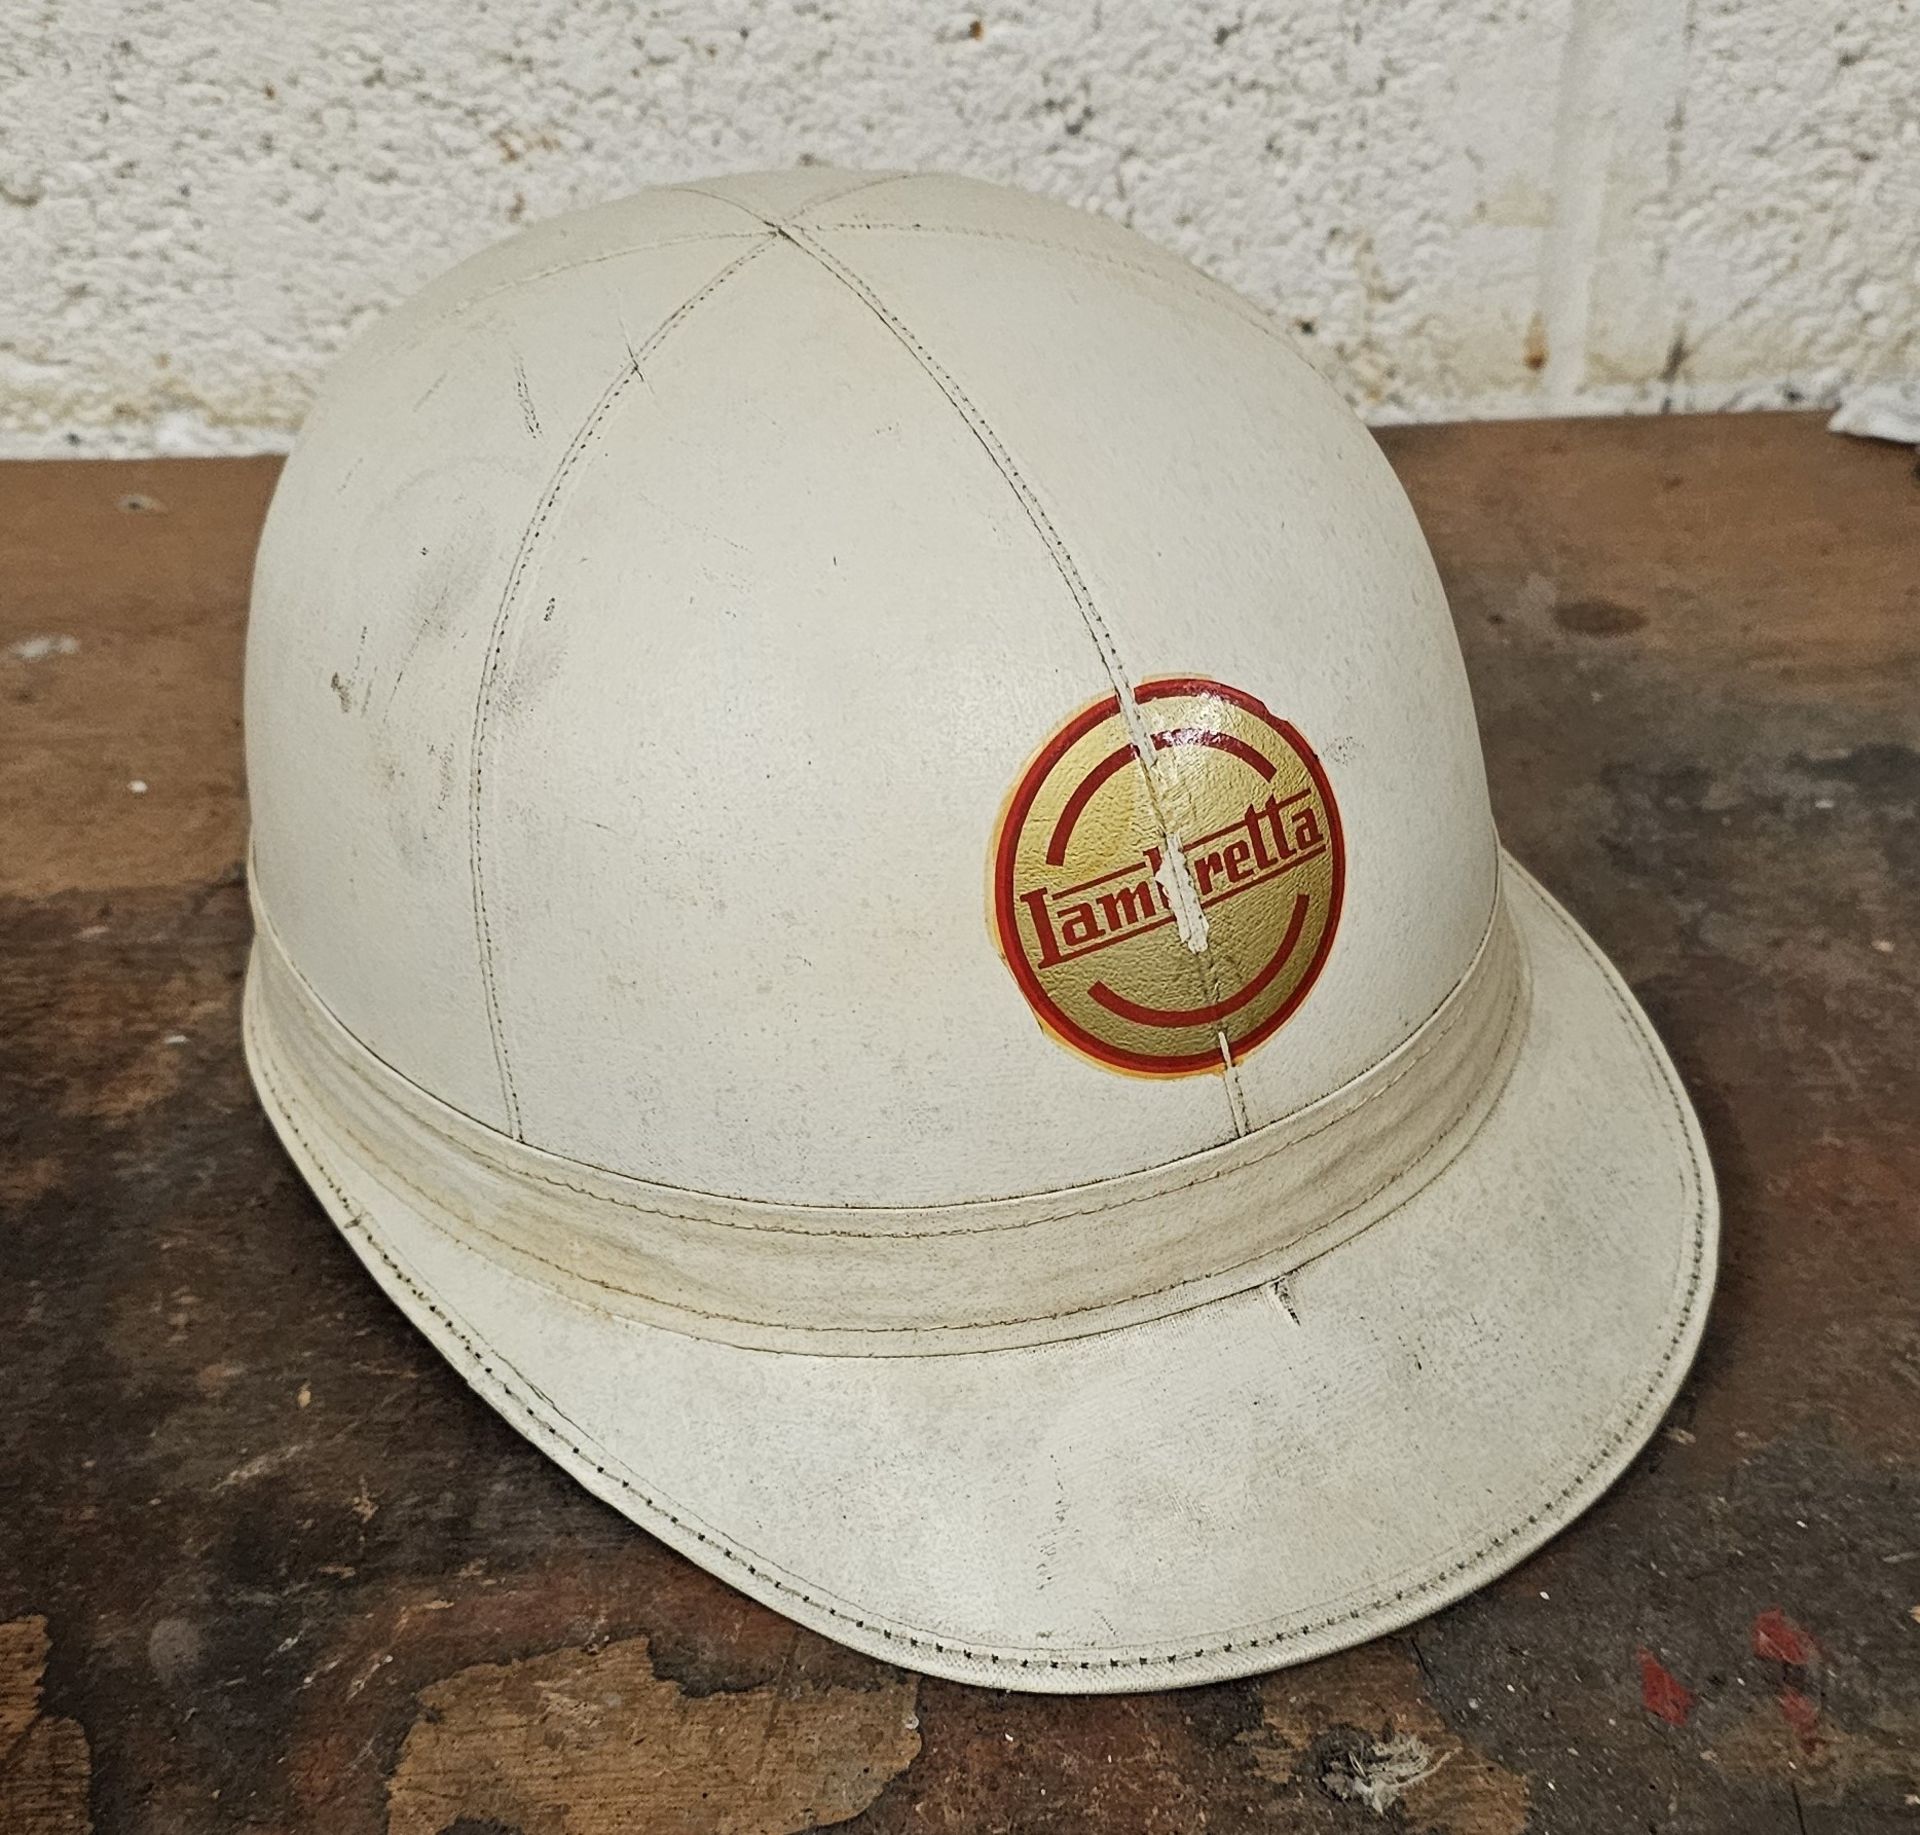 An Everoak cork lined helmet with Lambretta badge, size 7 1/4